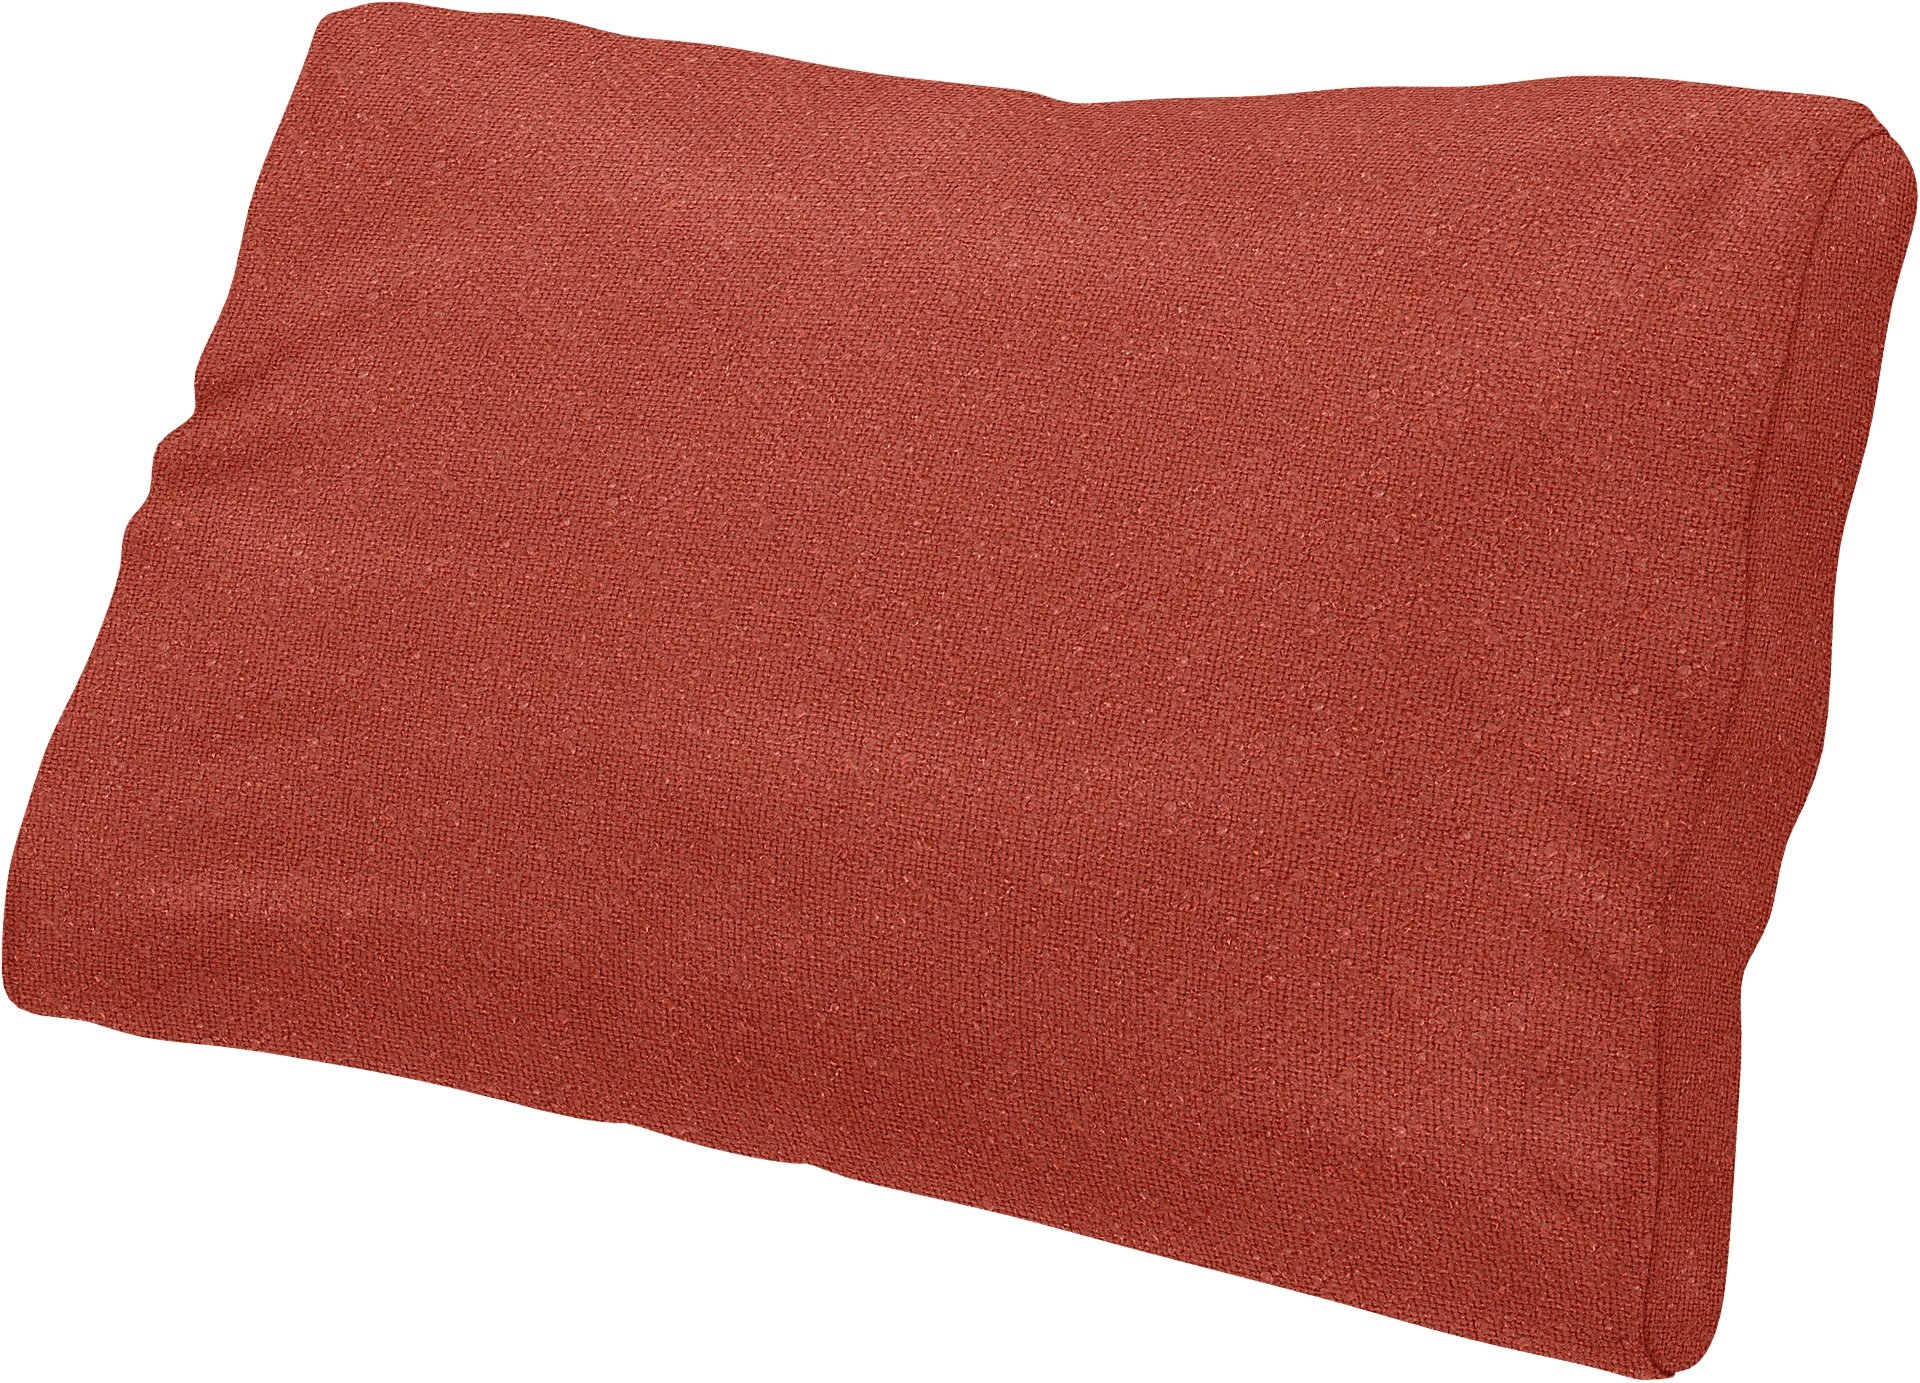 IKEA - Lumbar cushion cover Farlov, Coral Red, Outdoor - Bemz